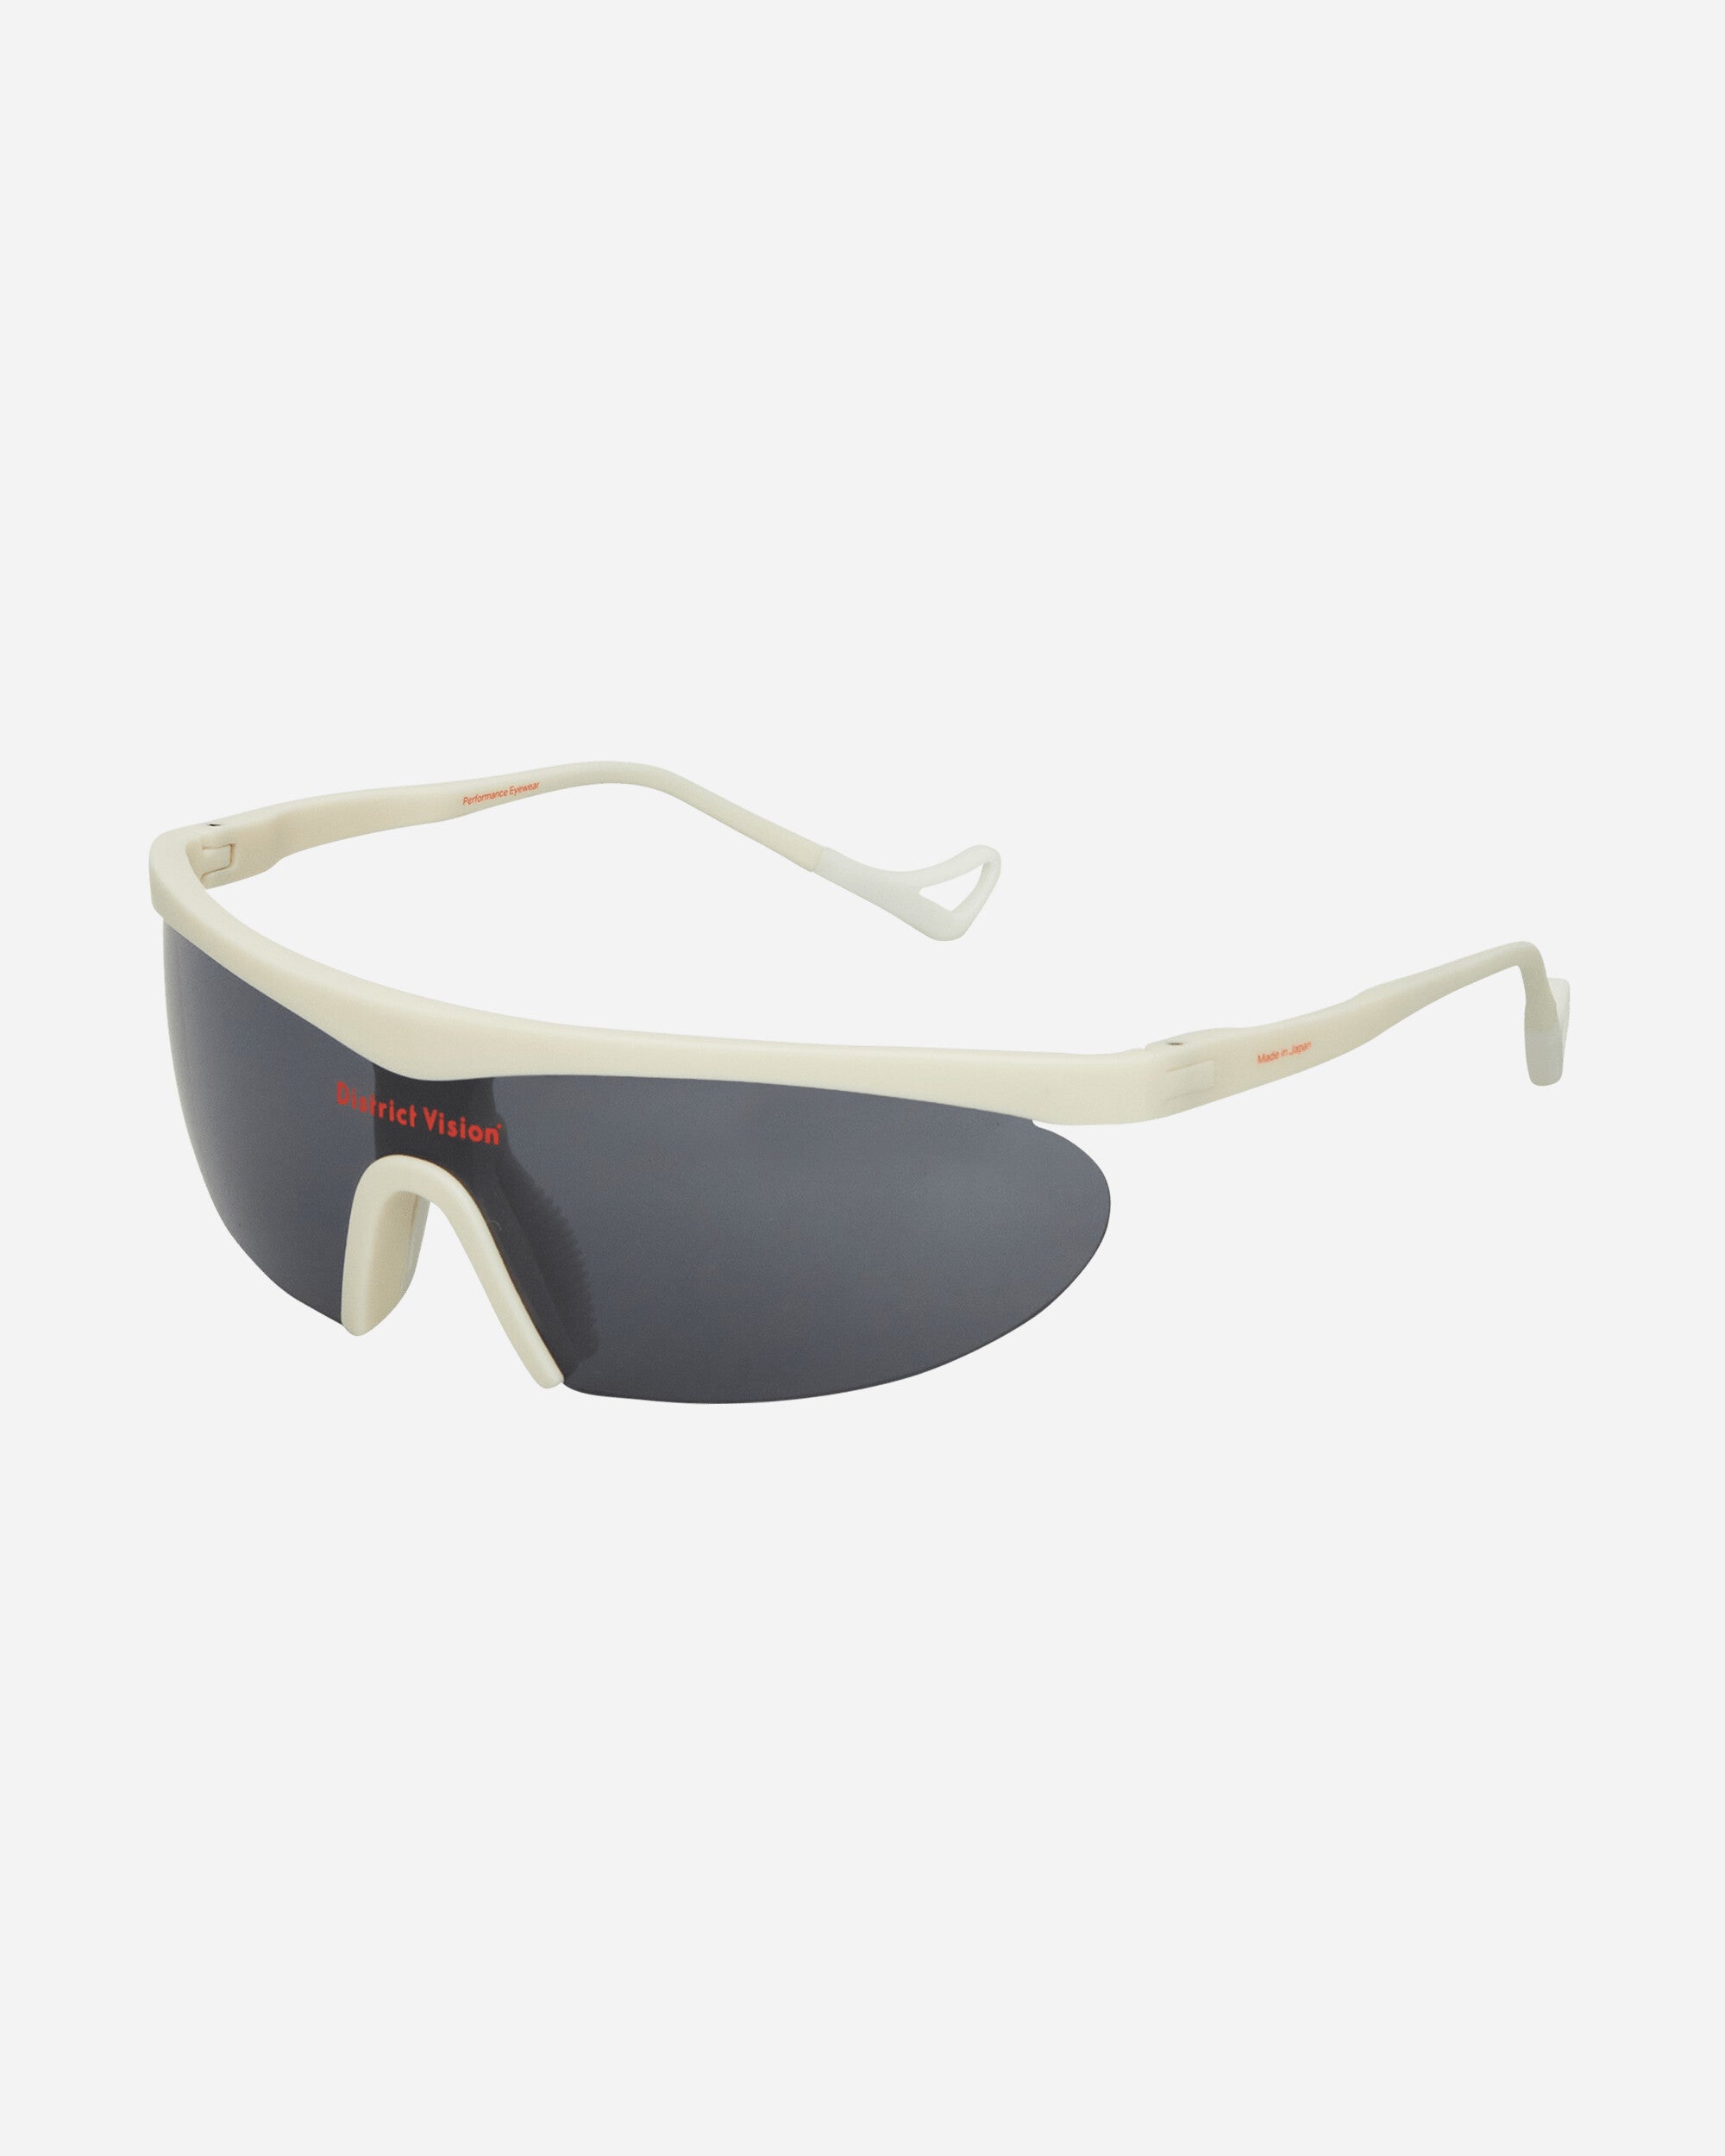 District Vision Koharu Eclipse Limestone/D+ Onyx Mirror Eyewear Sunglasses DVG005 LOM